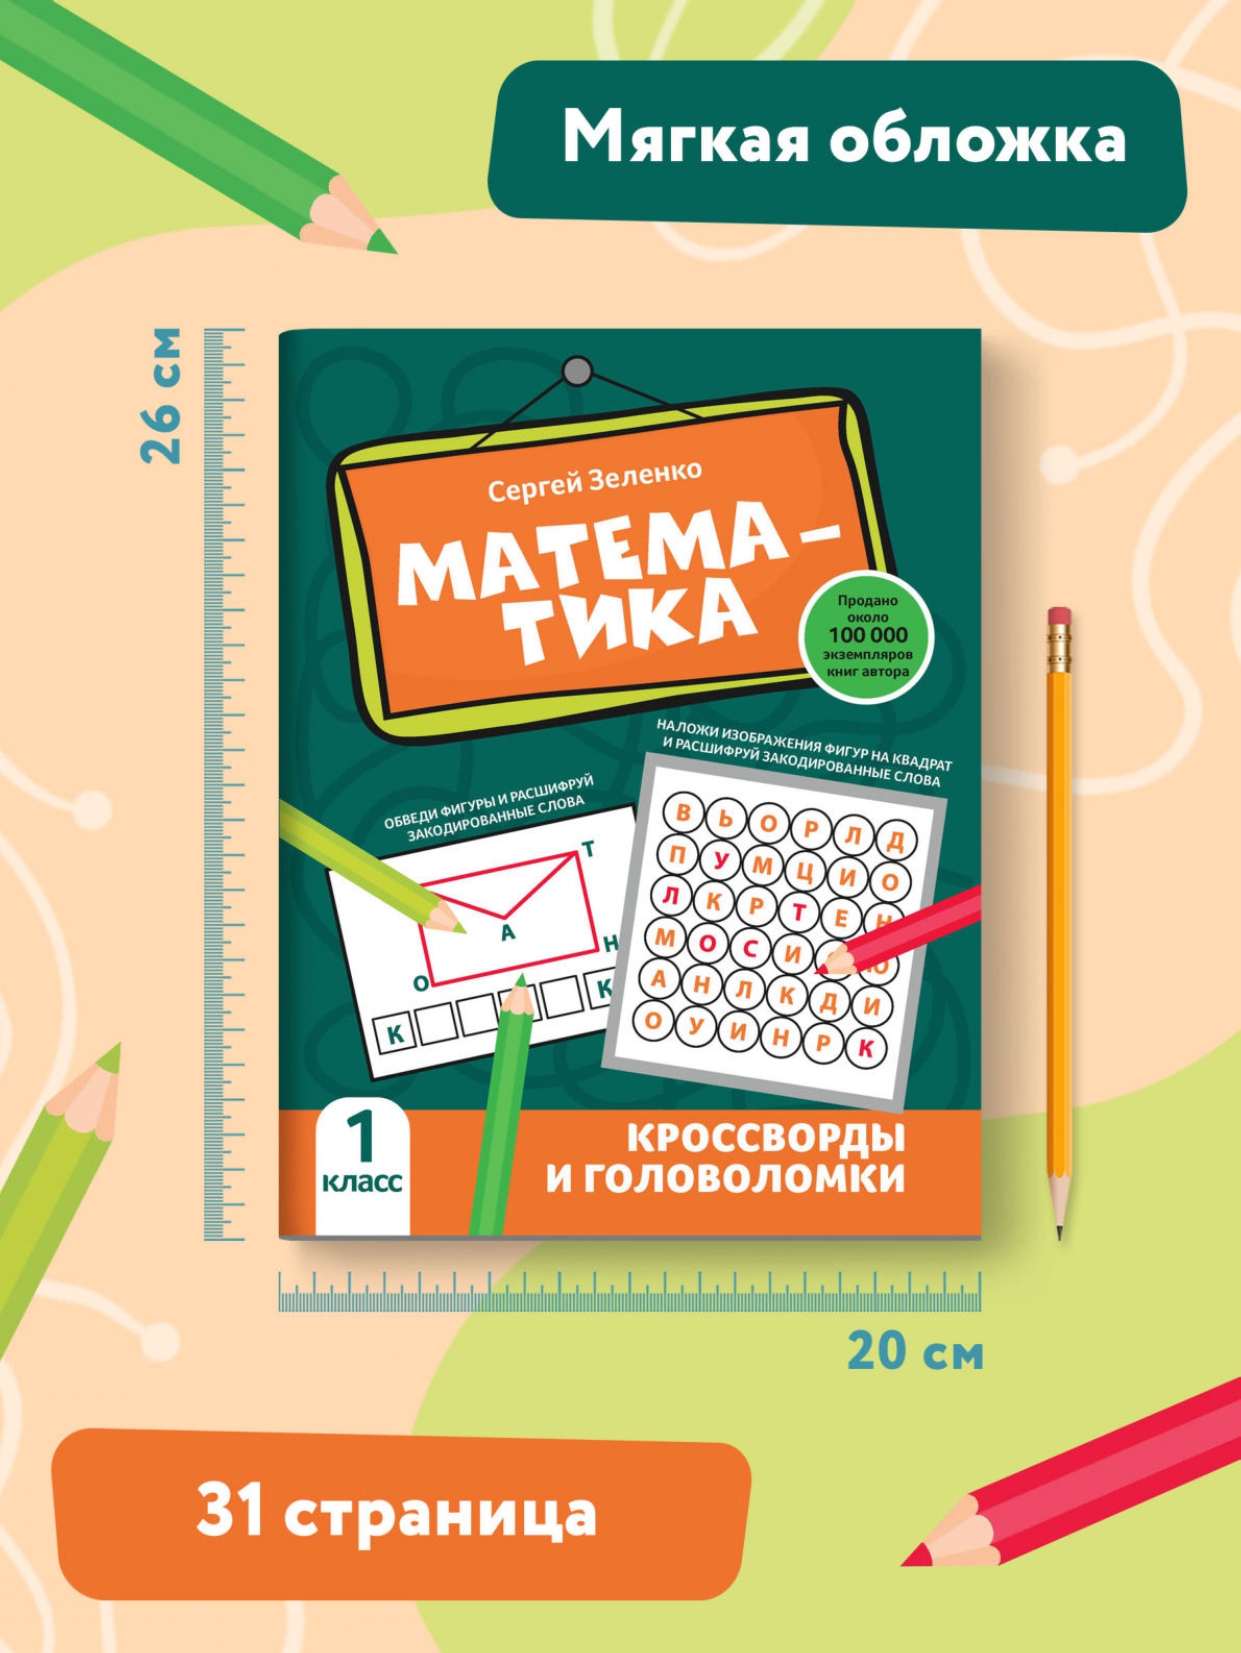 Книга Феникс Математика: кроссворды и головоломки: 1 класс - фото 8